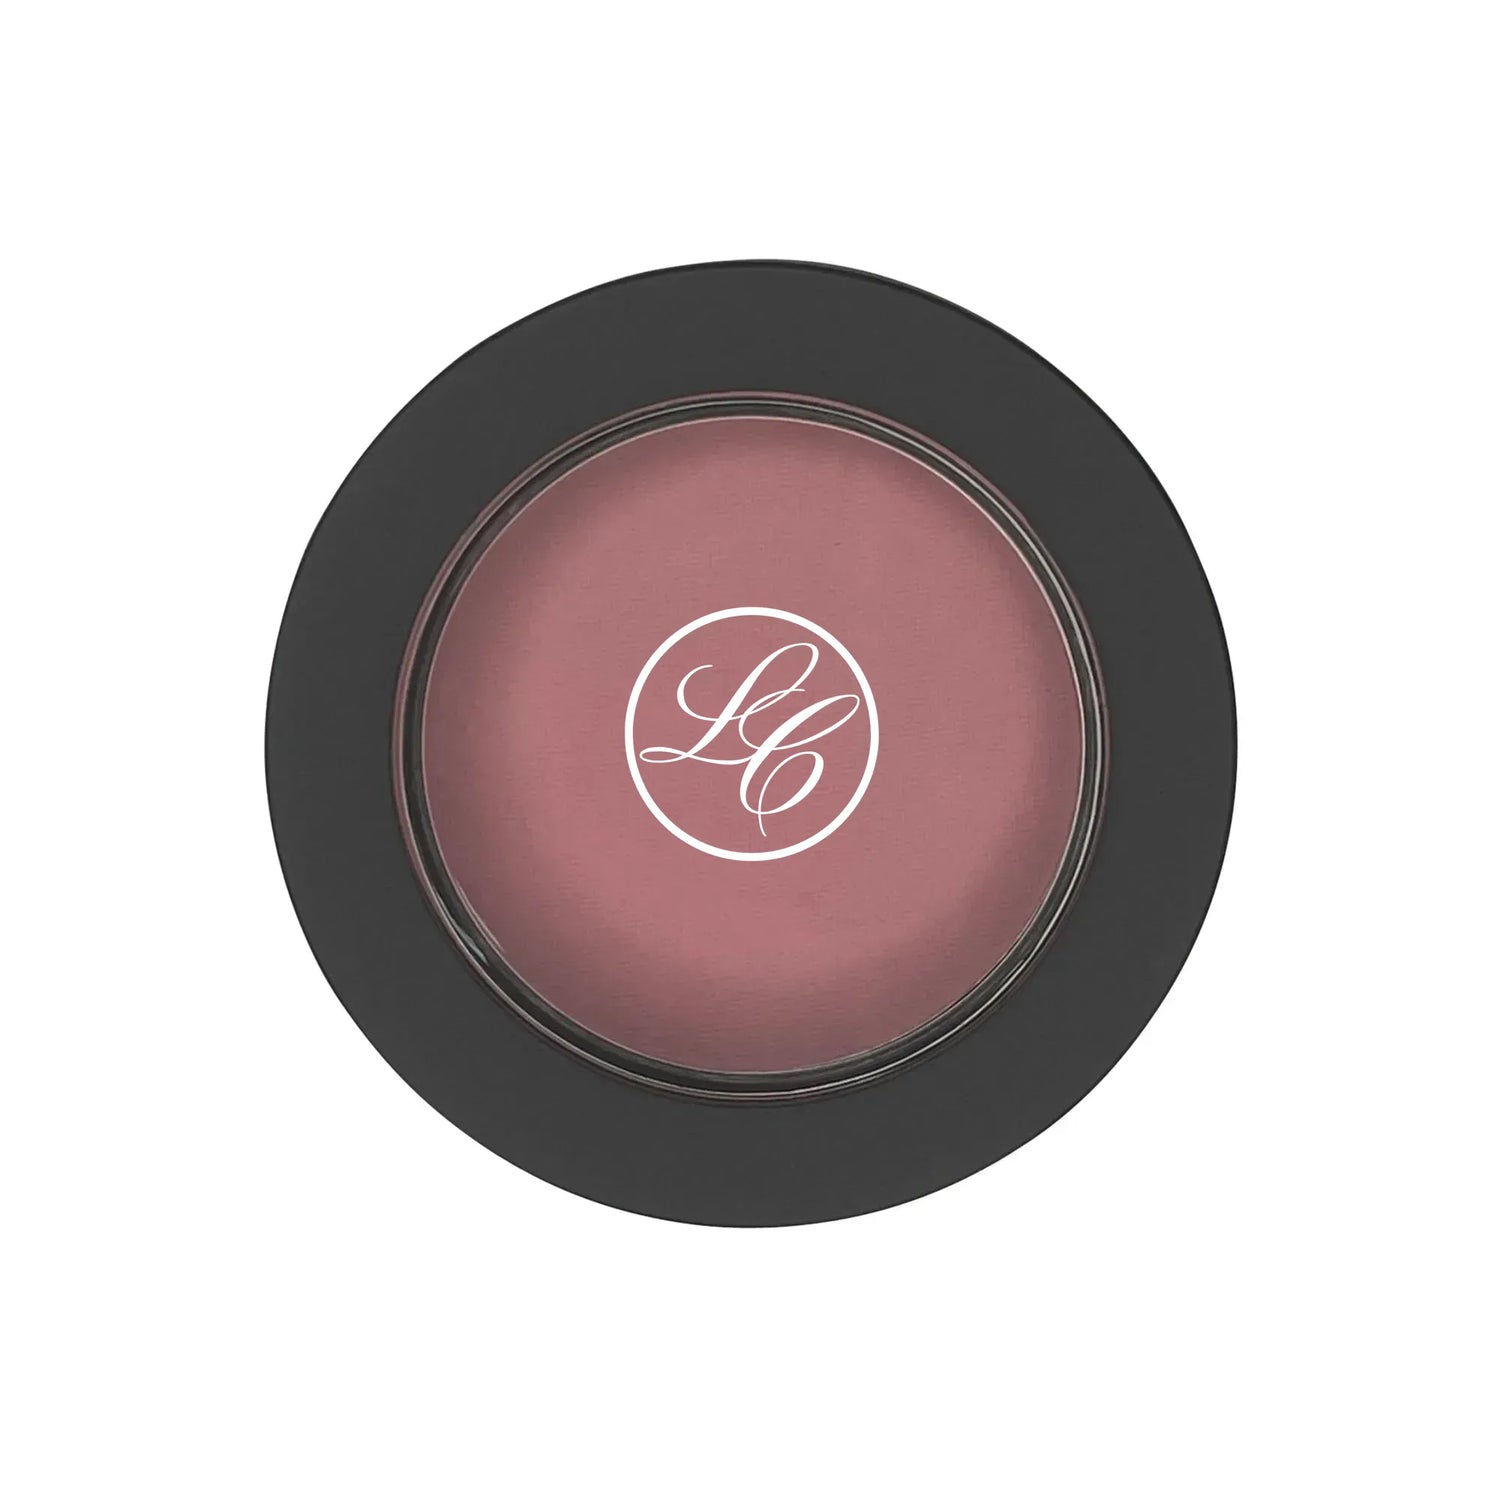 Single Pan Blush - Magnolia - Lunox Cosmetics